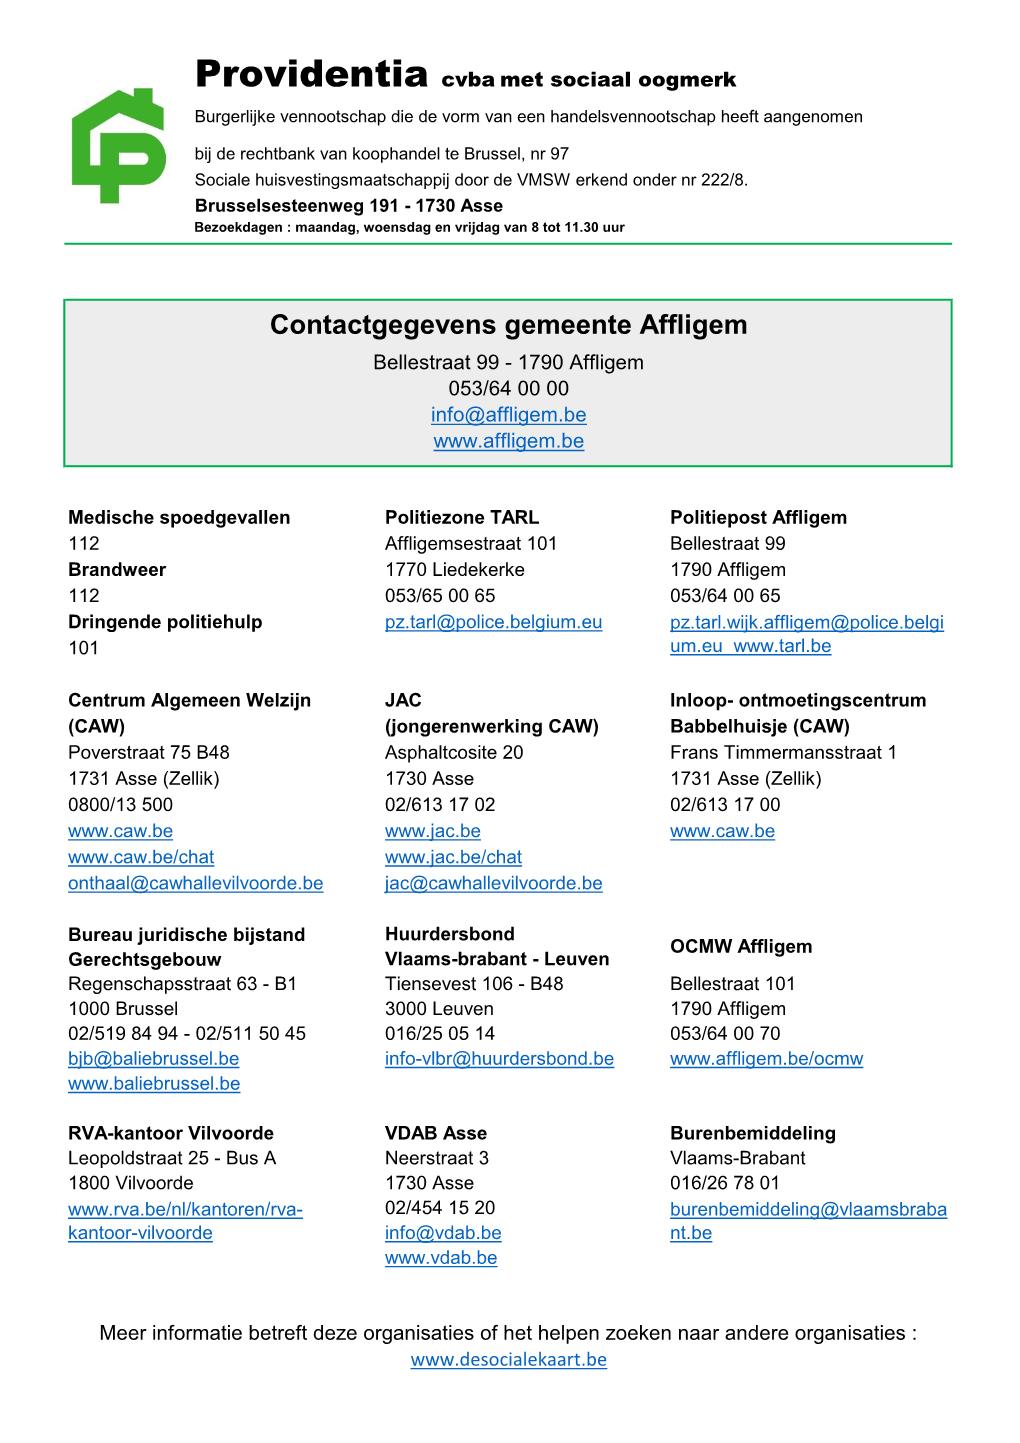 Contactgegevens Gemeente Affligem Bellestraat 99 - 1790 Affligem 053/64 00 00 Info@Affligem.Be